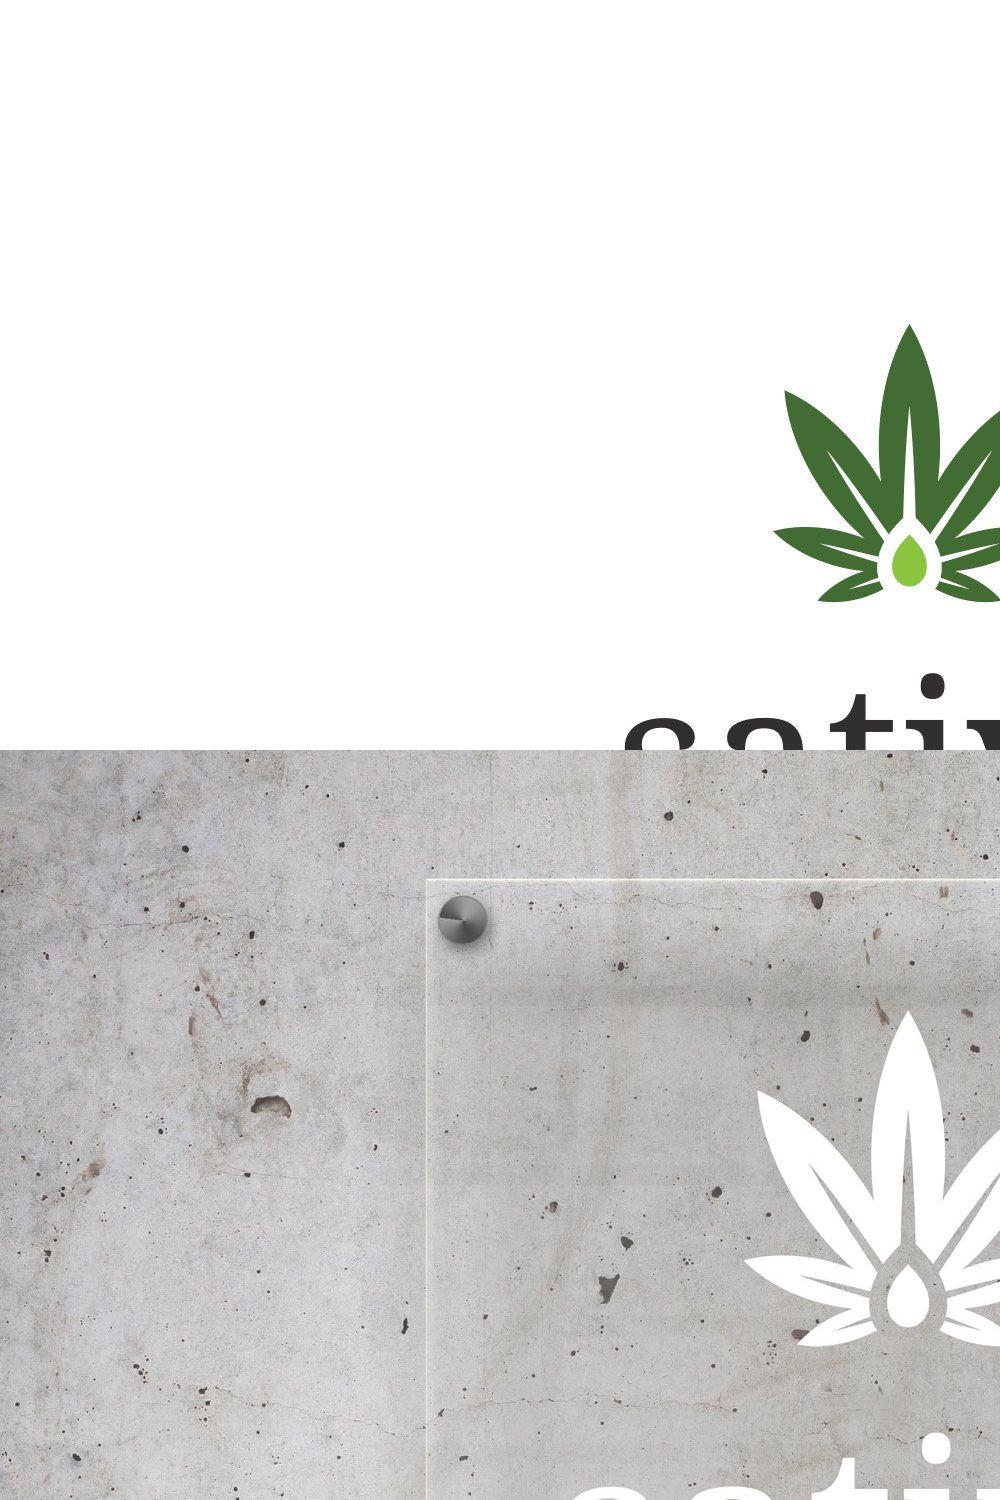 Sativo Cannabis Hemp Marijuana Logo pinterest preview image.